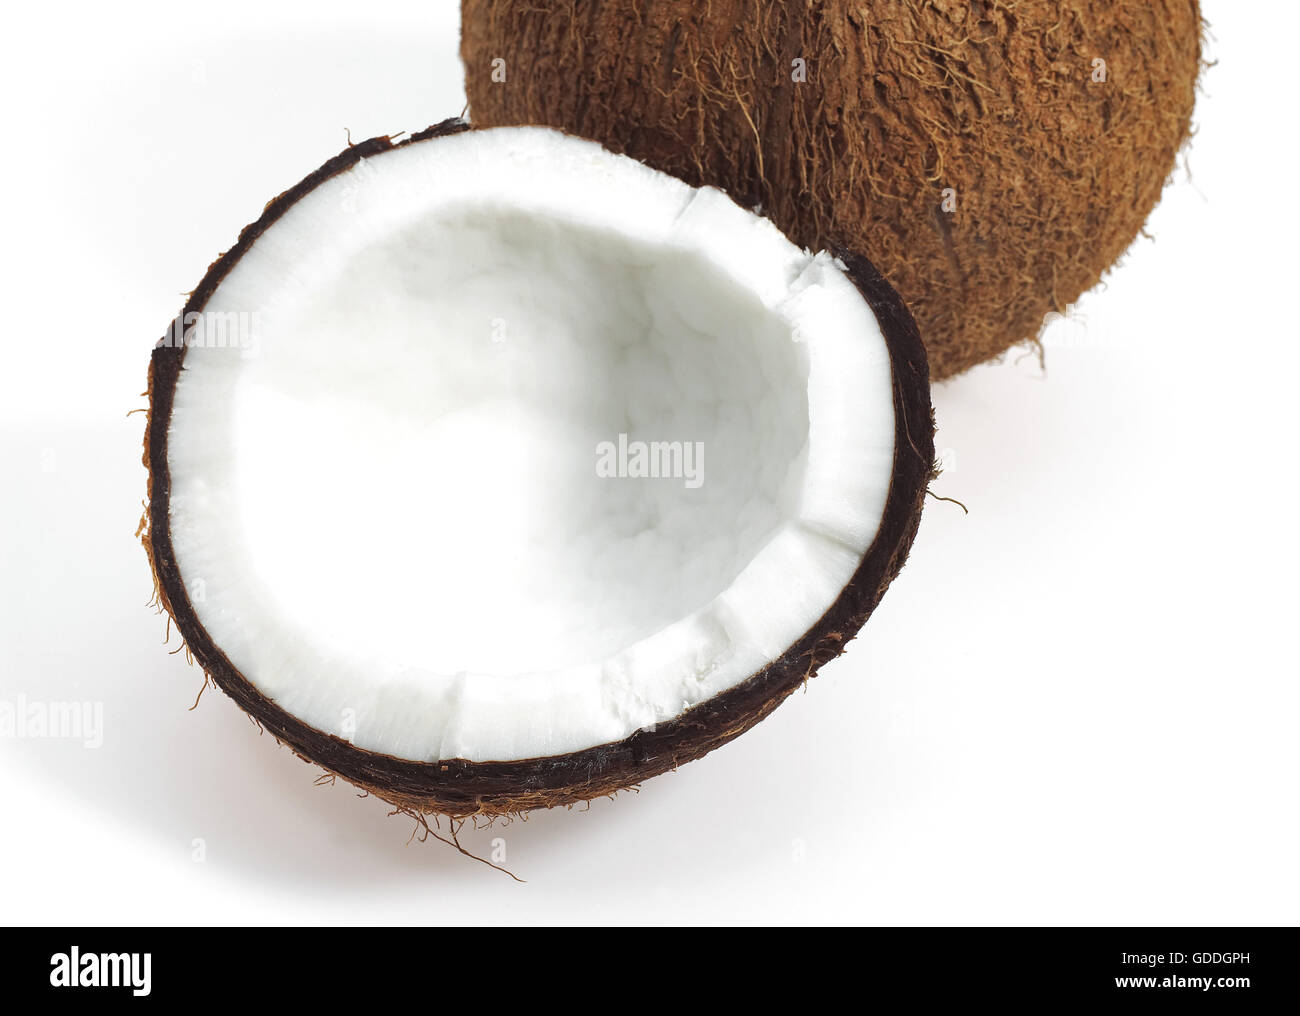 Coconut, cocos nucifera, Fruit against White Background Stock Photo